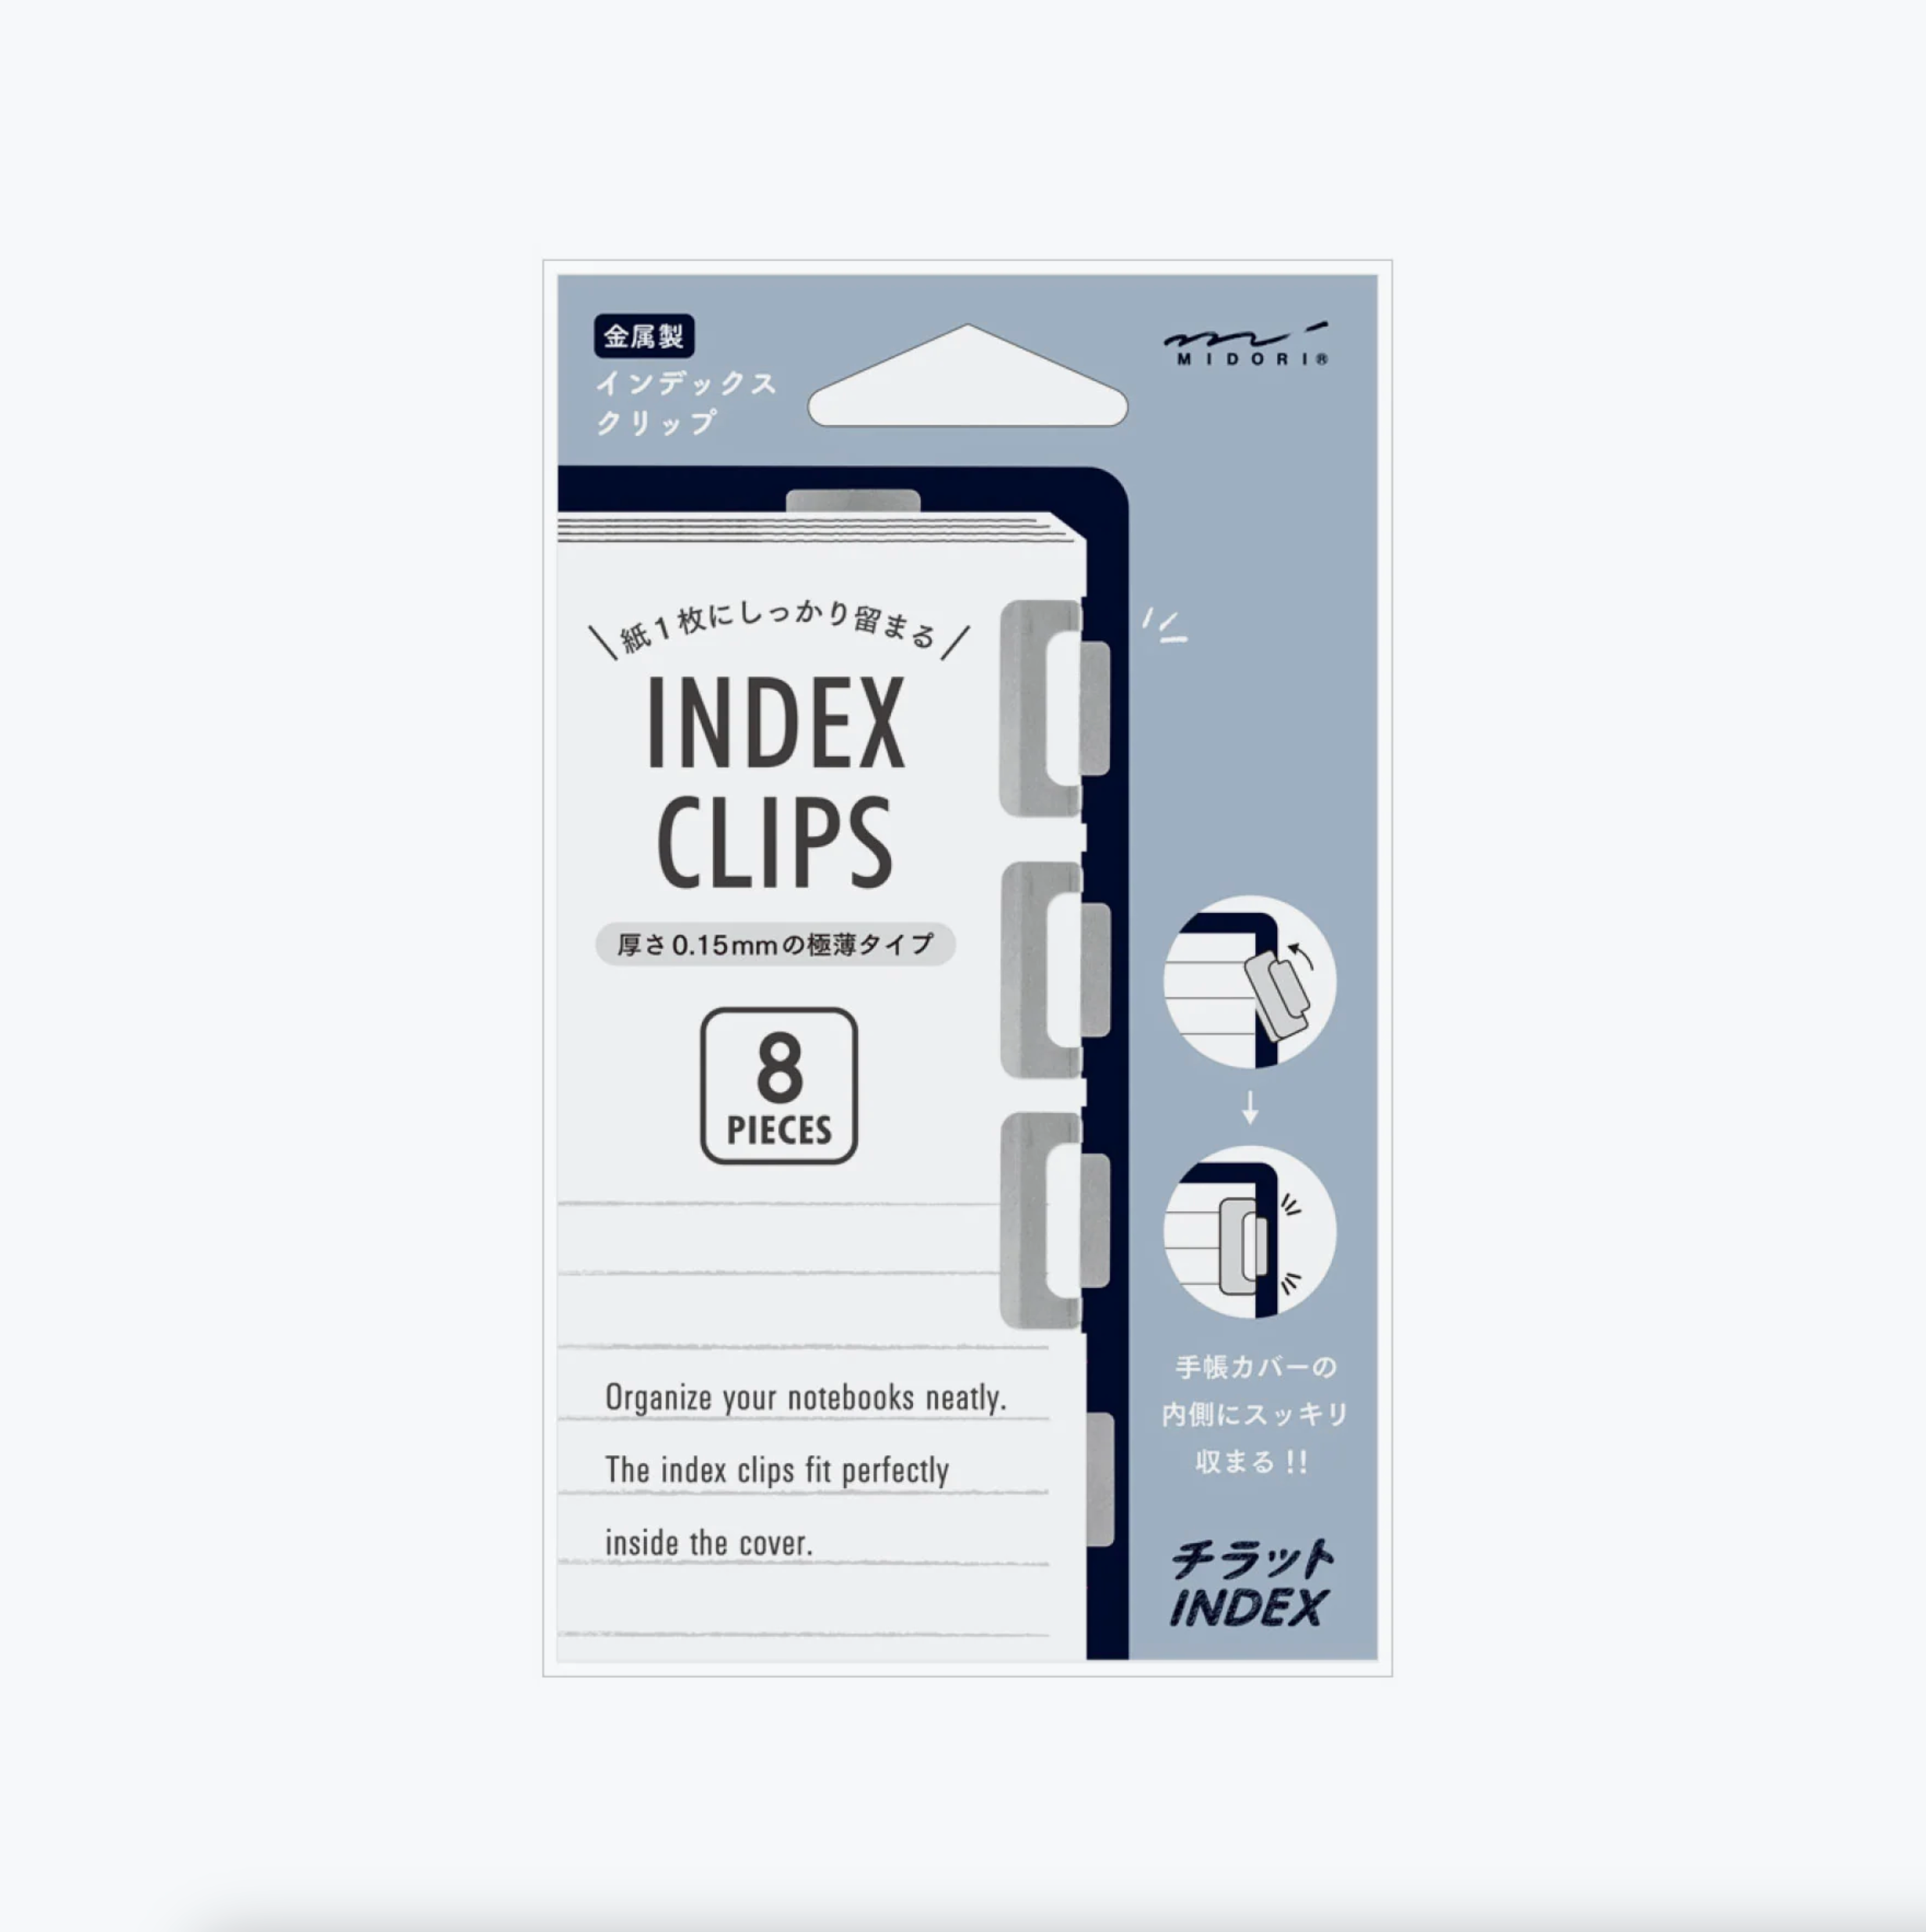 Midori Index clips